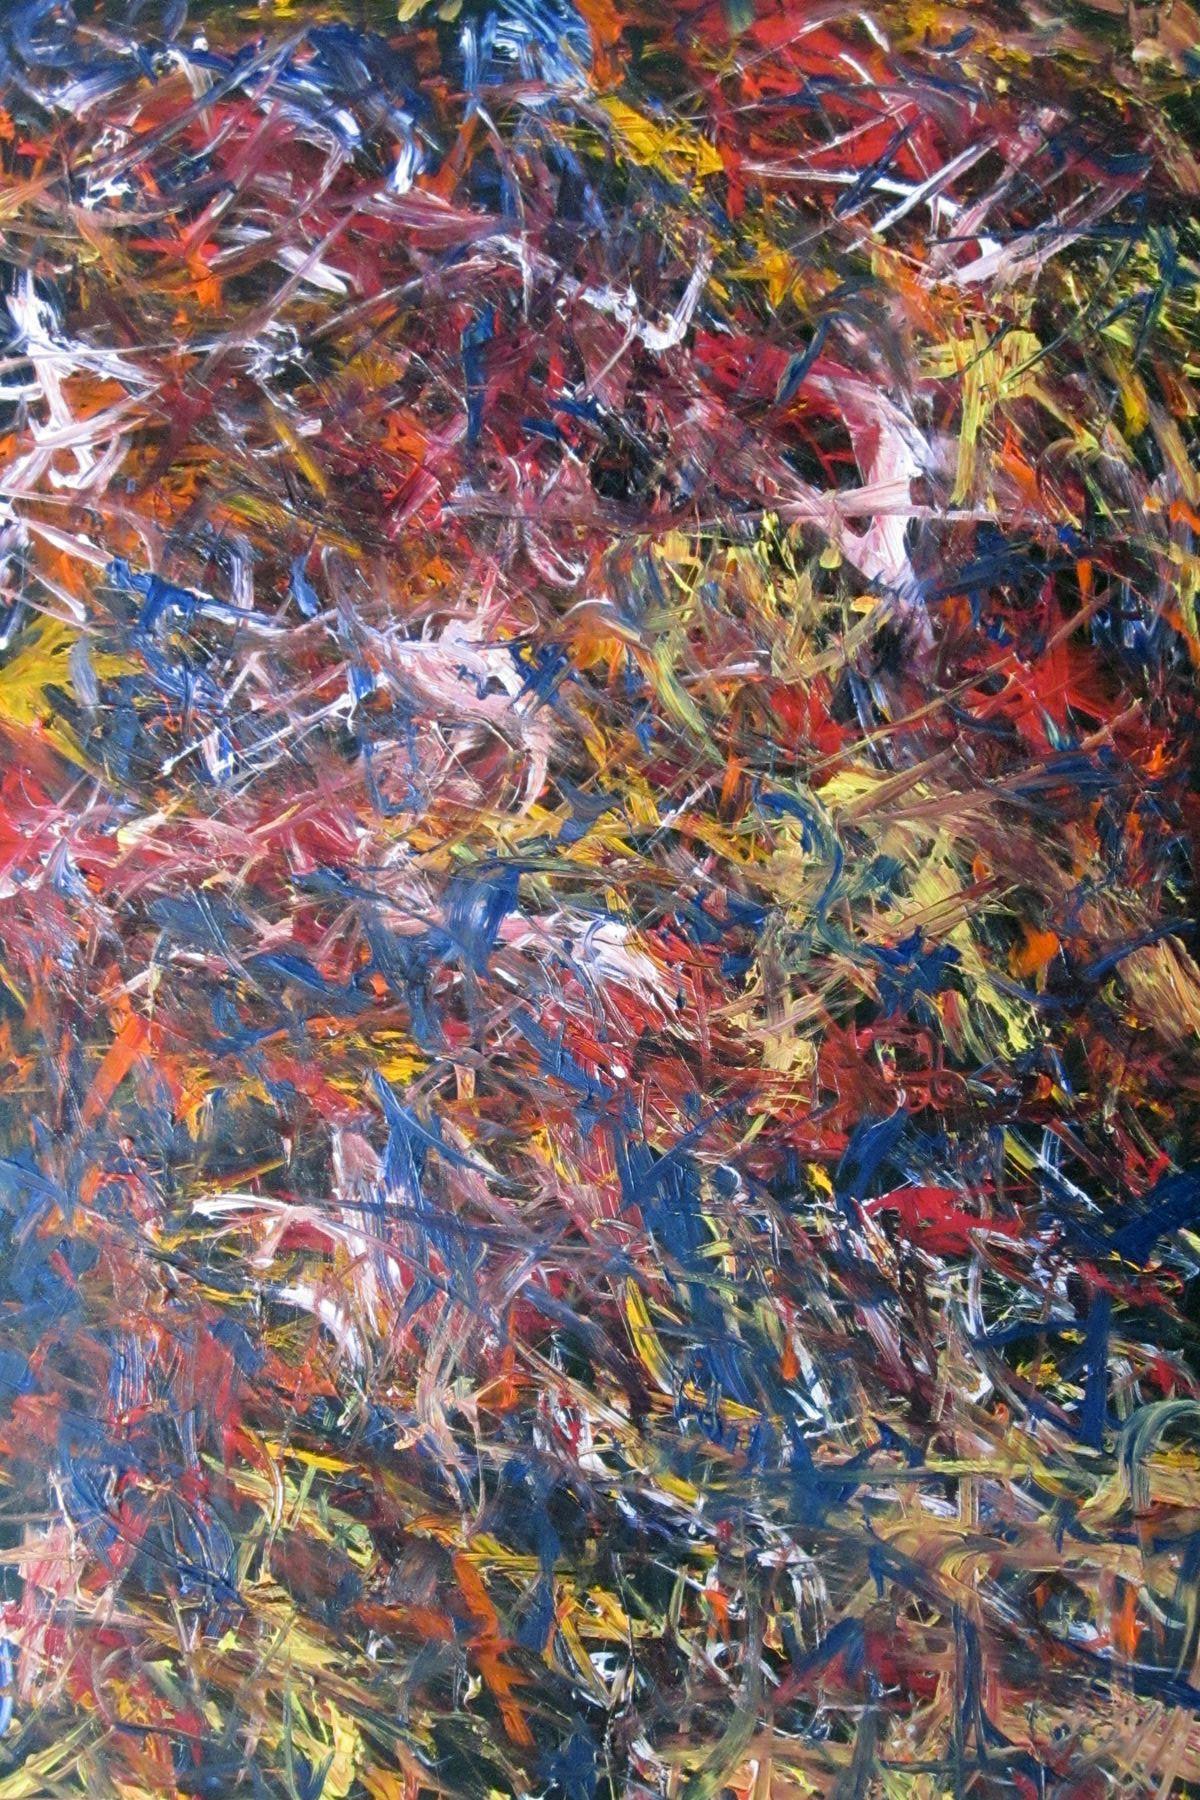 Abstraktes Gemälde in Acryl auf Leinwand. Signiert: Alexander Hecht, betitelt 